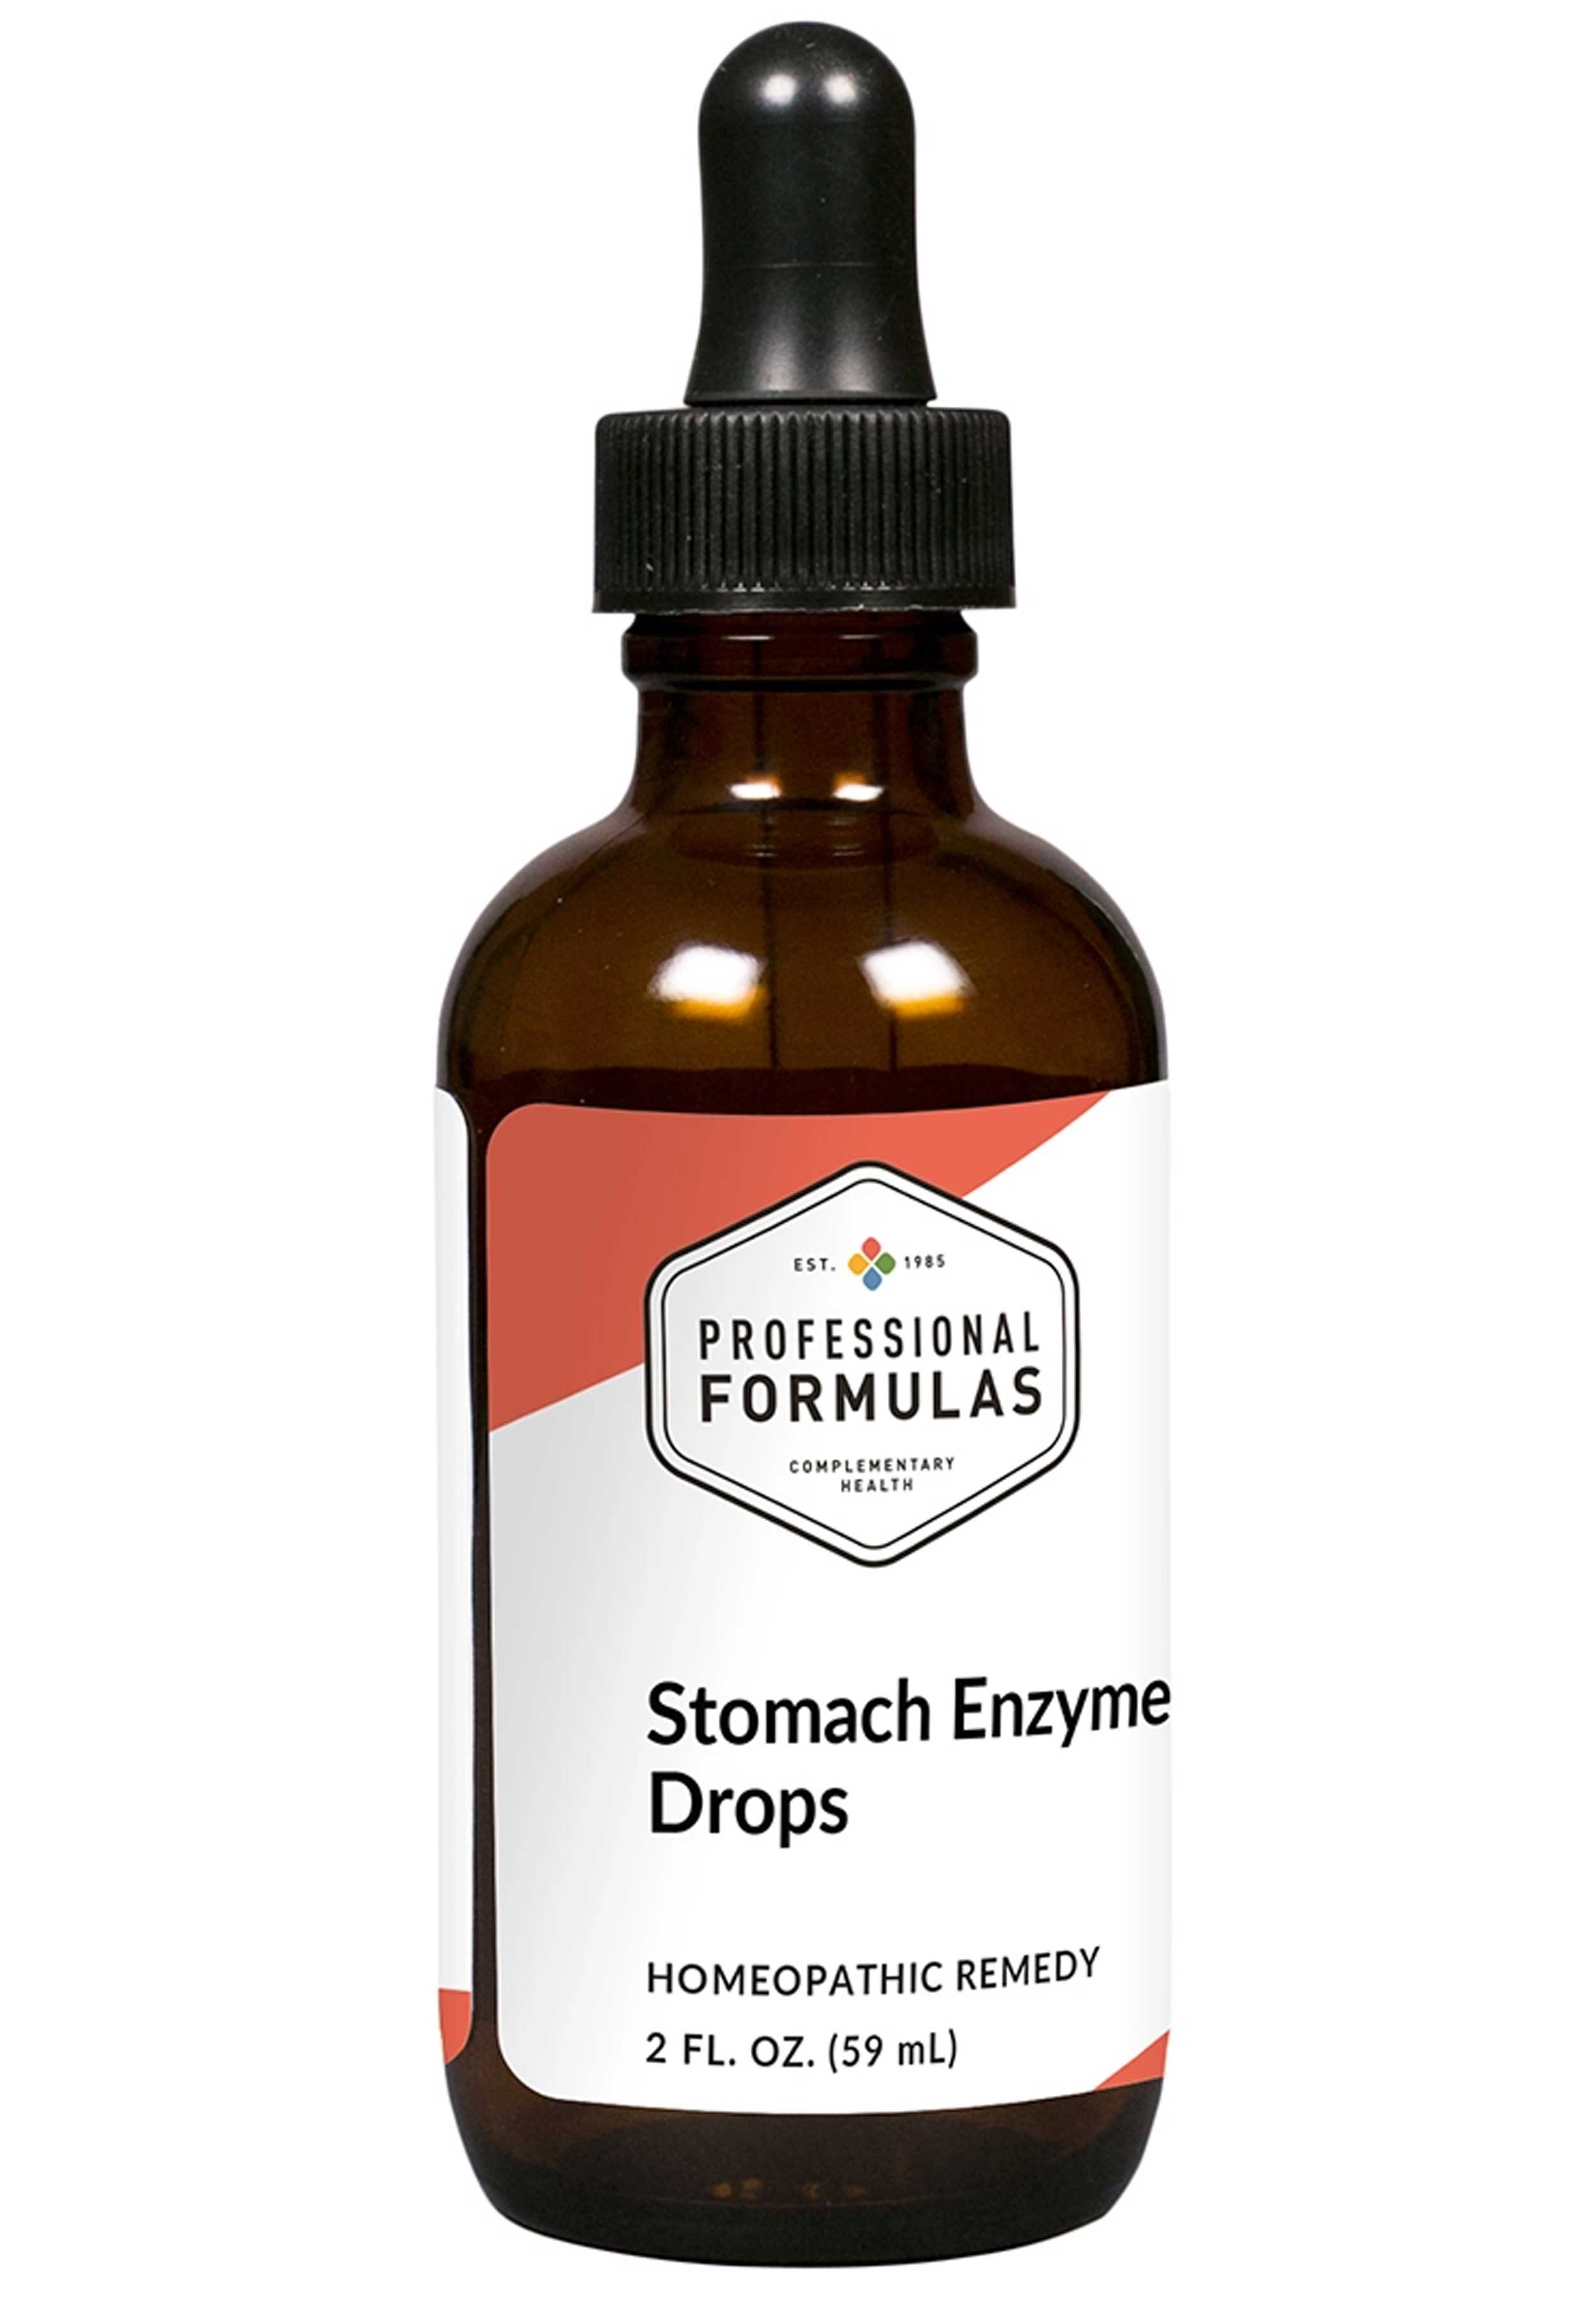 Professional Formulas Stomach Enzyme Drops